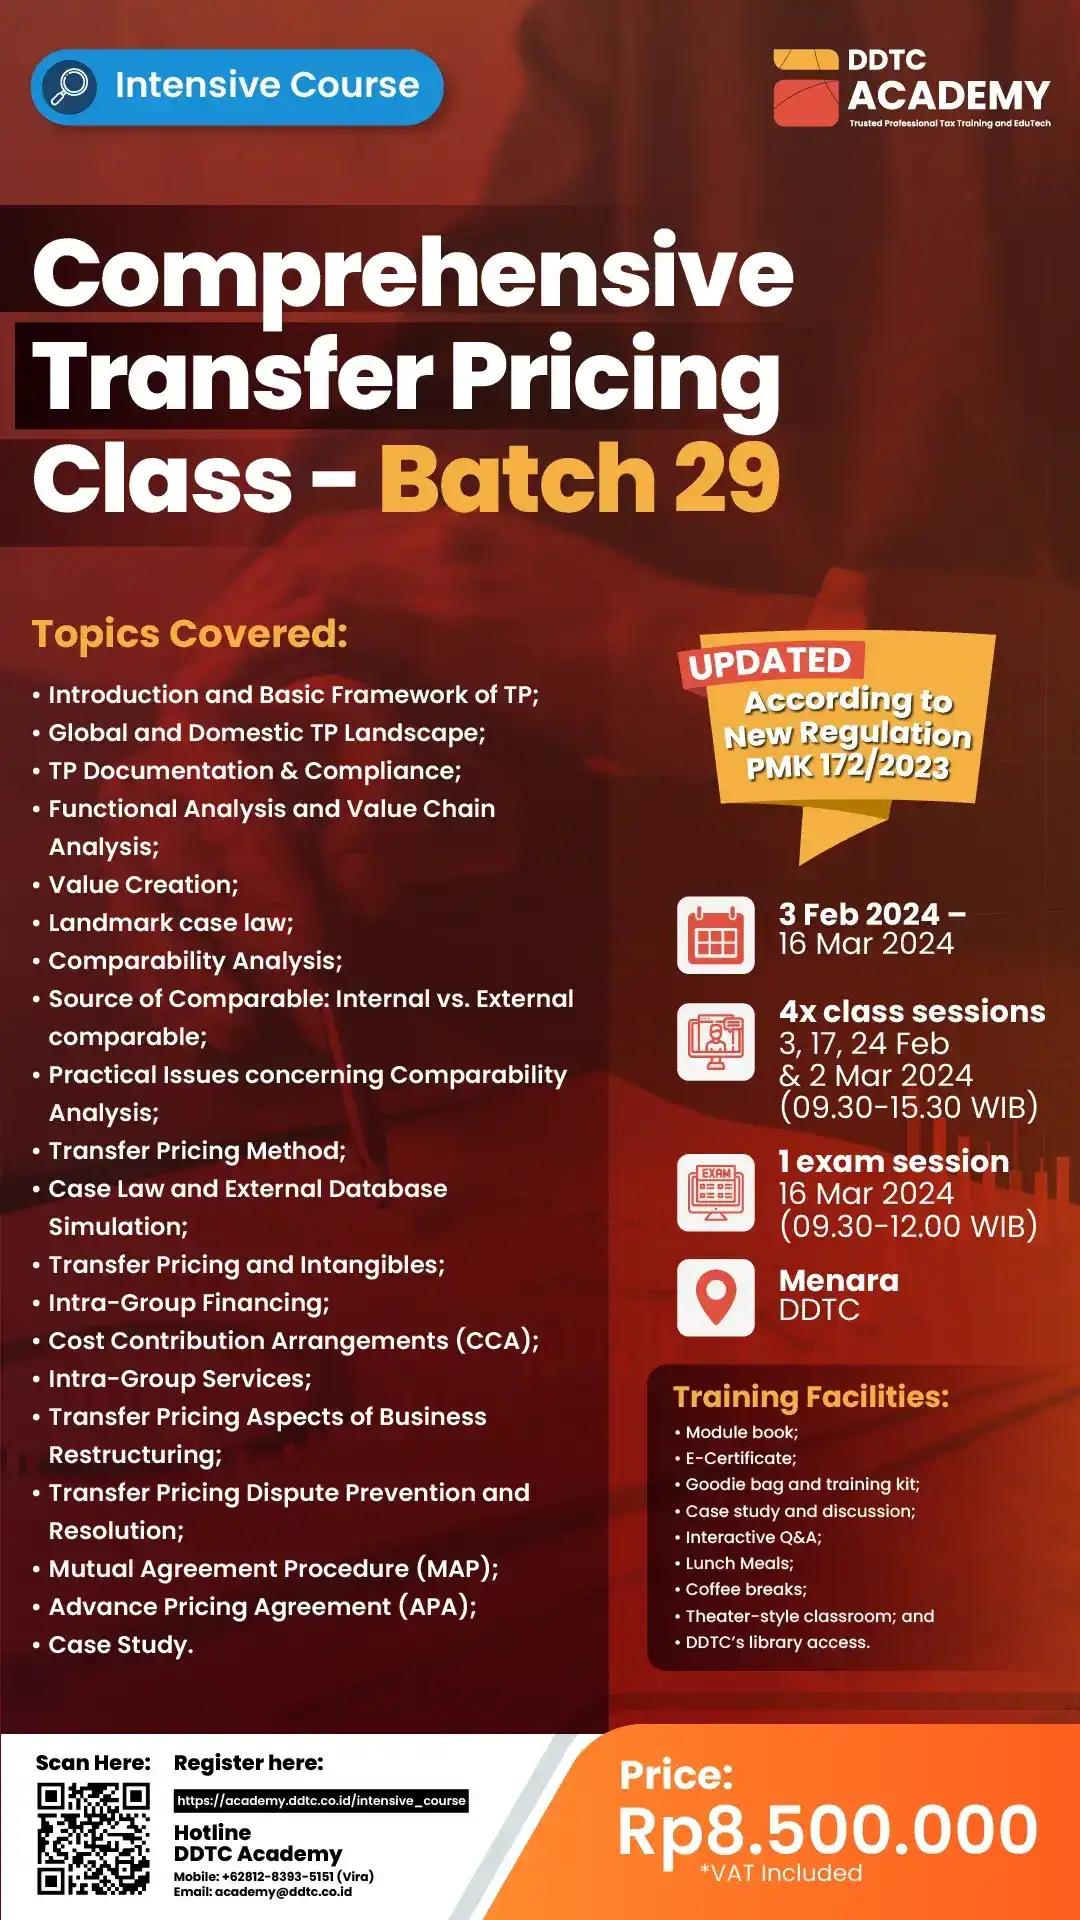 Batch Terbaru Pelatihan Intensif Transfer Pricing DDTC Academy 2024